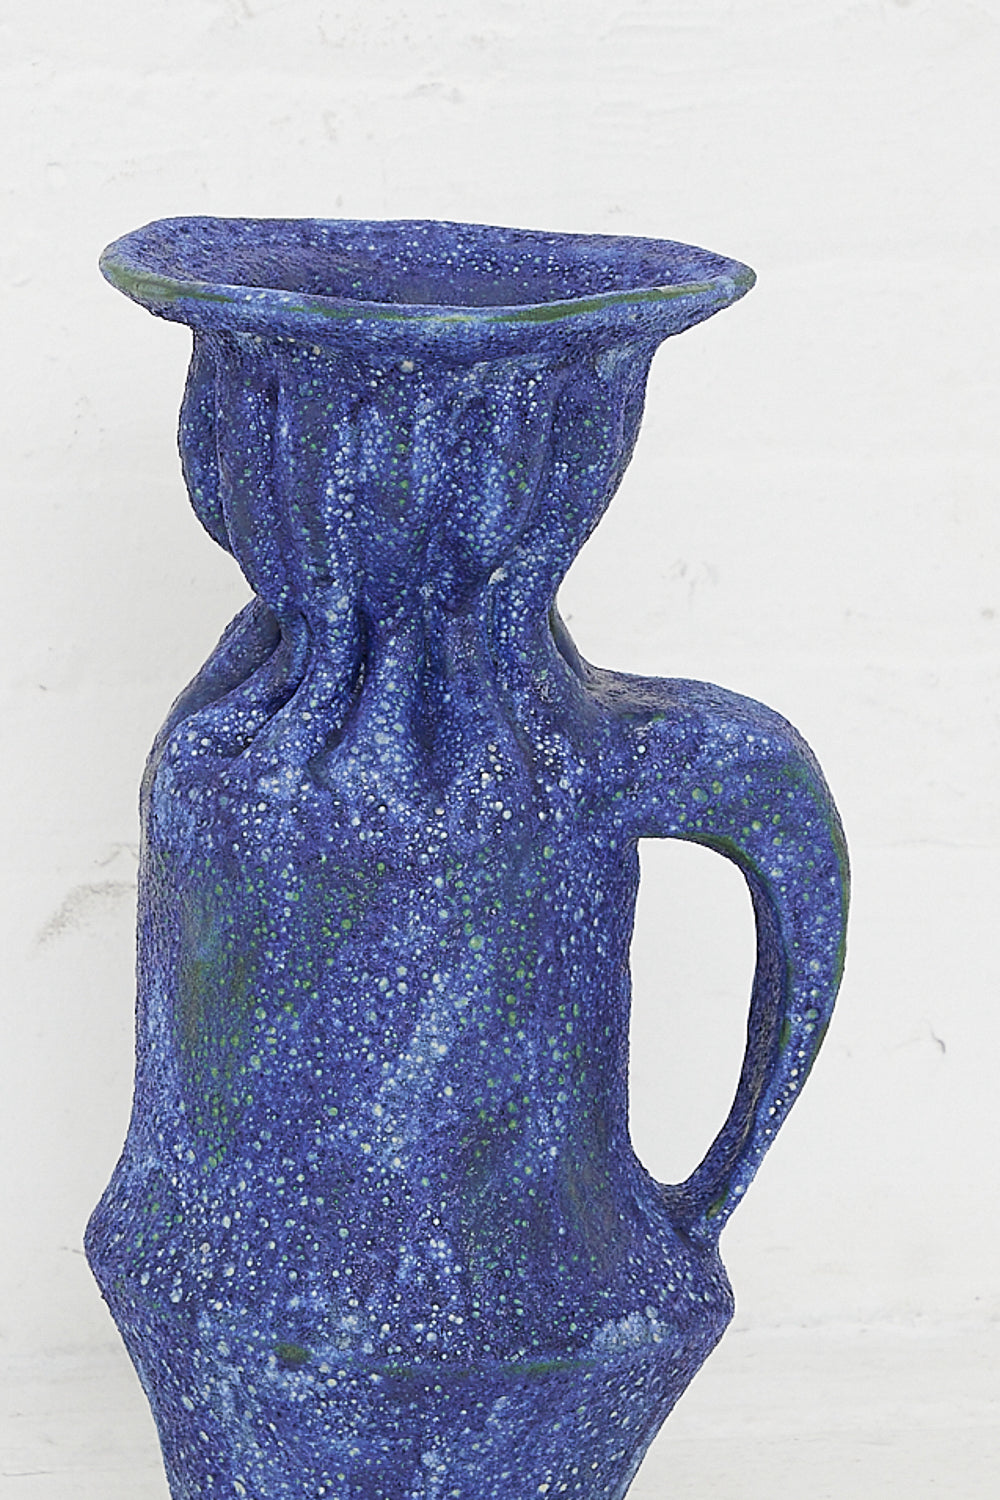 ANK Ceramics - Celestial Blue Vessel detail